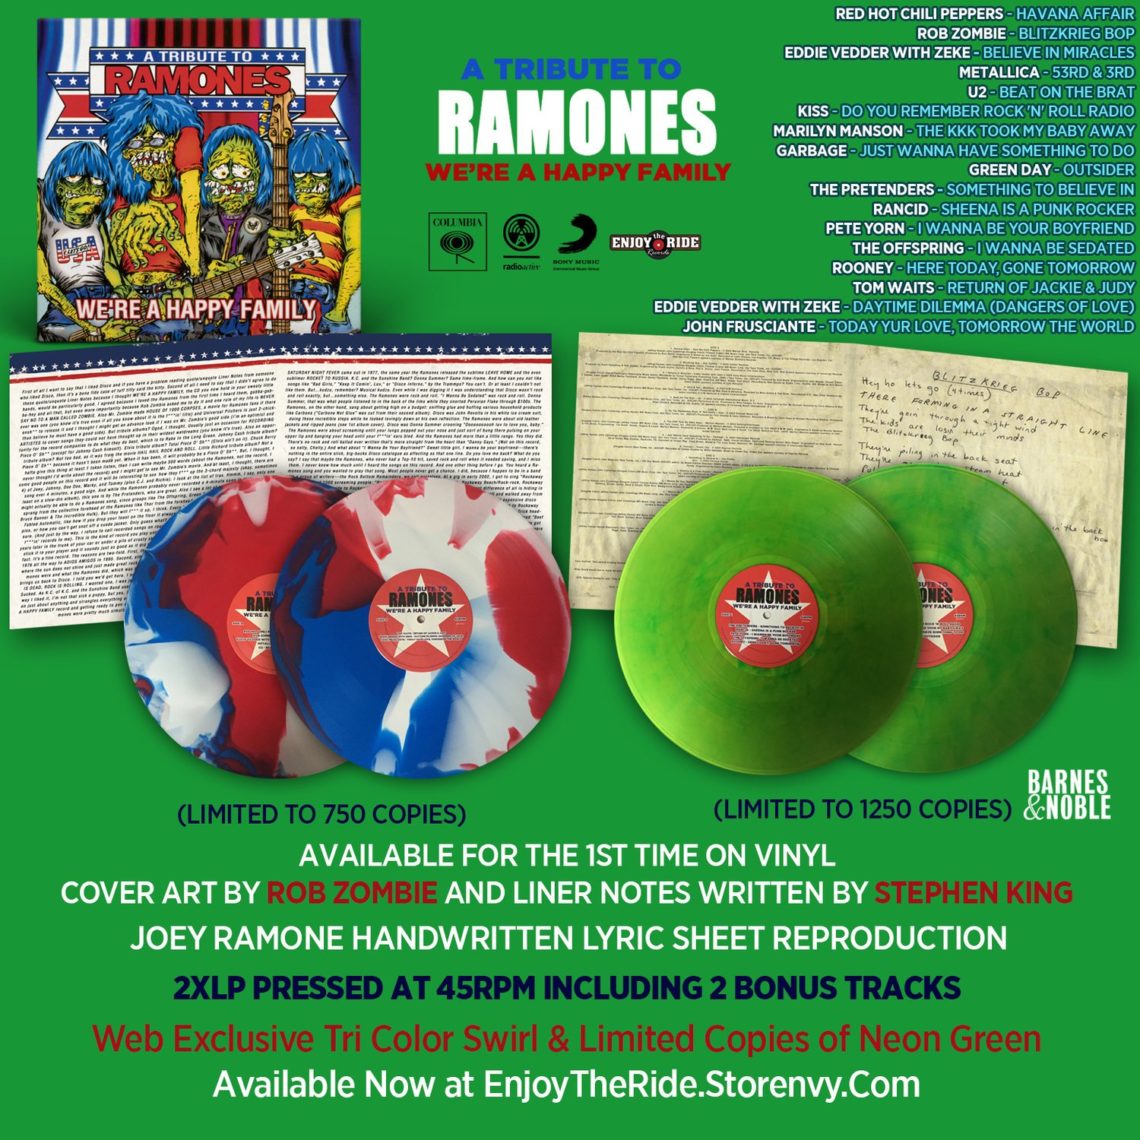 We Are a Happy Family Tribute to Ramones vinyl promo